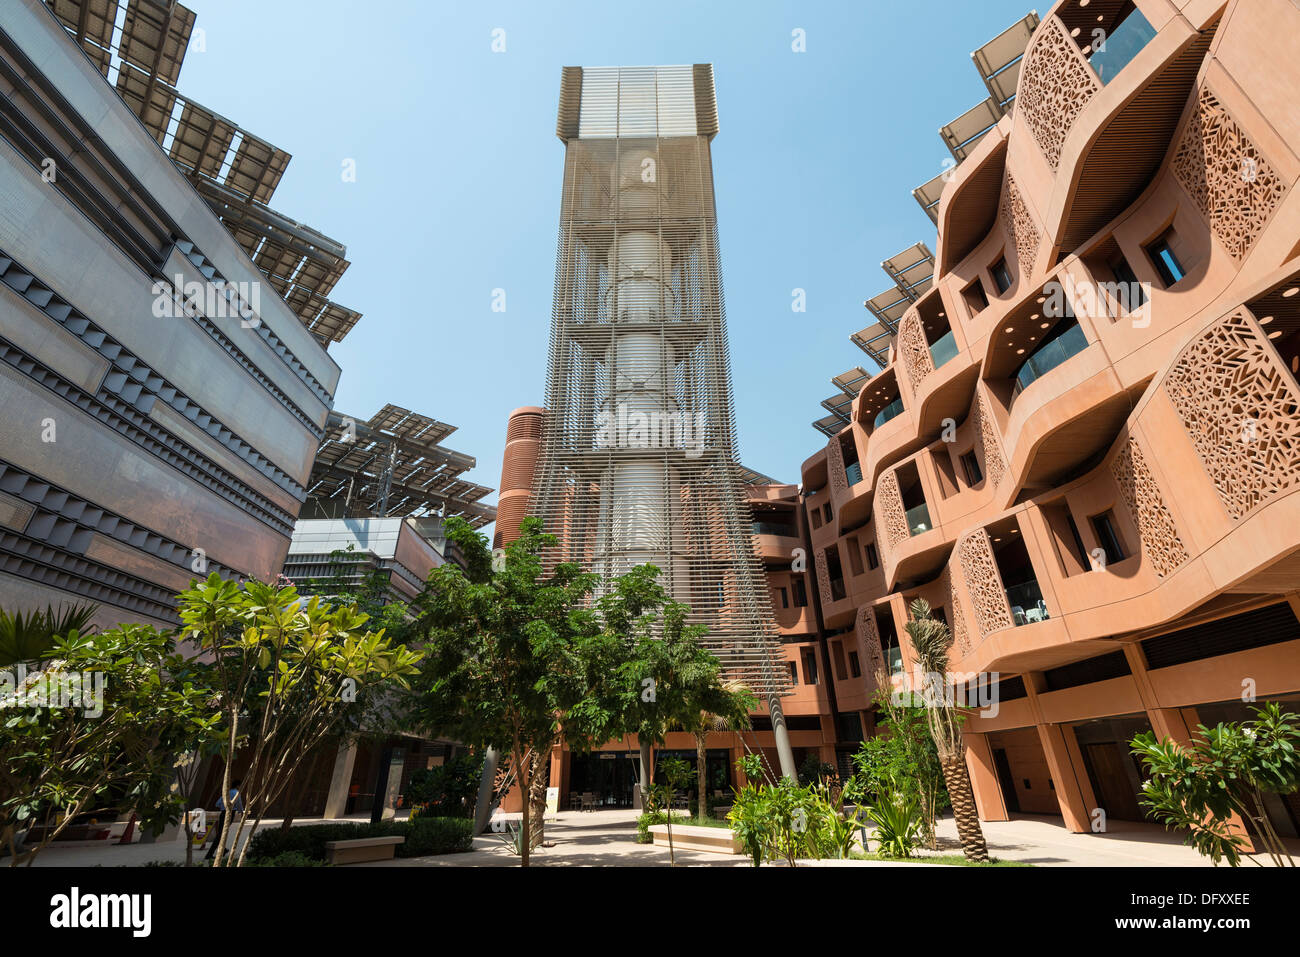 Heat circulation of Masdar headquarter building via wind cones – UAE